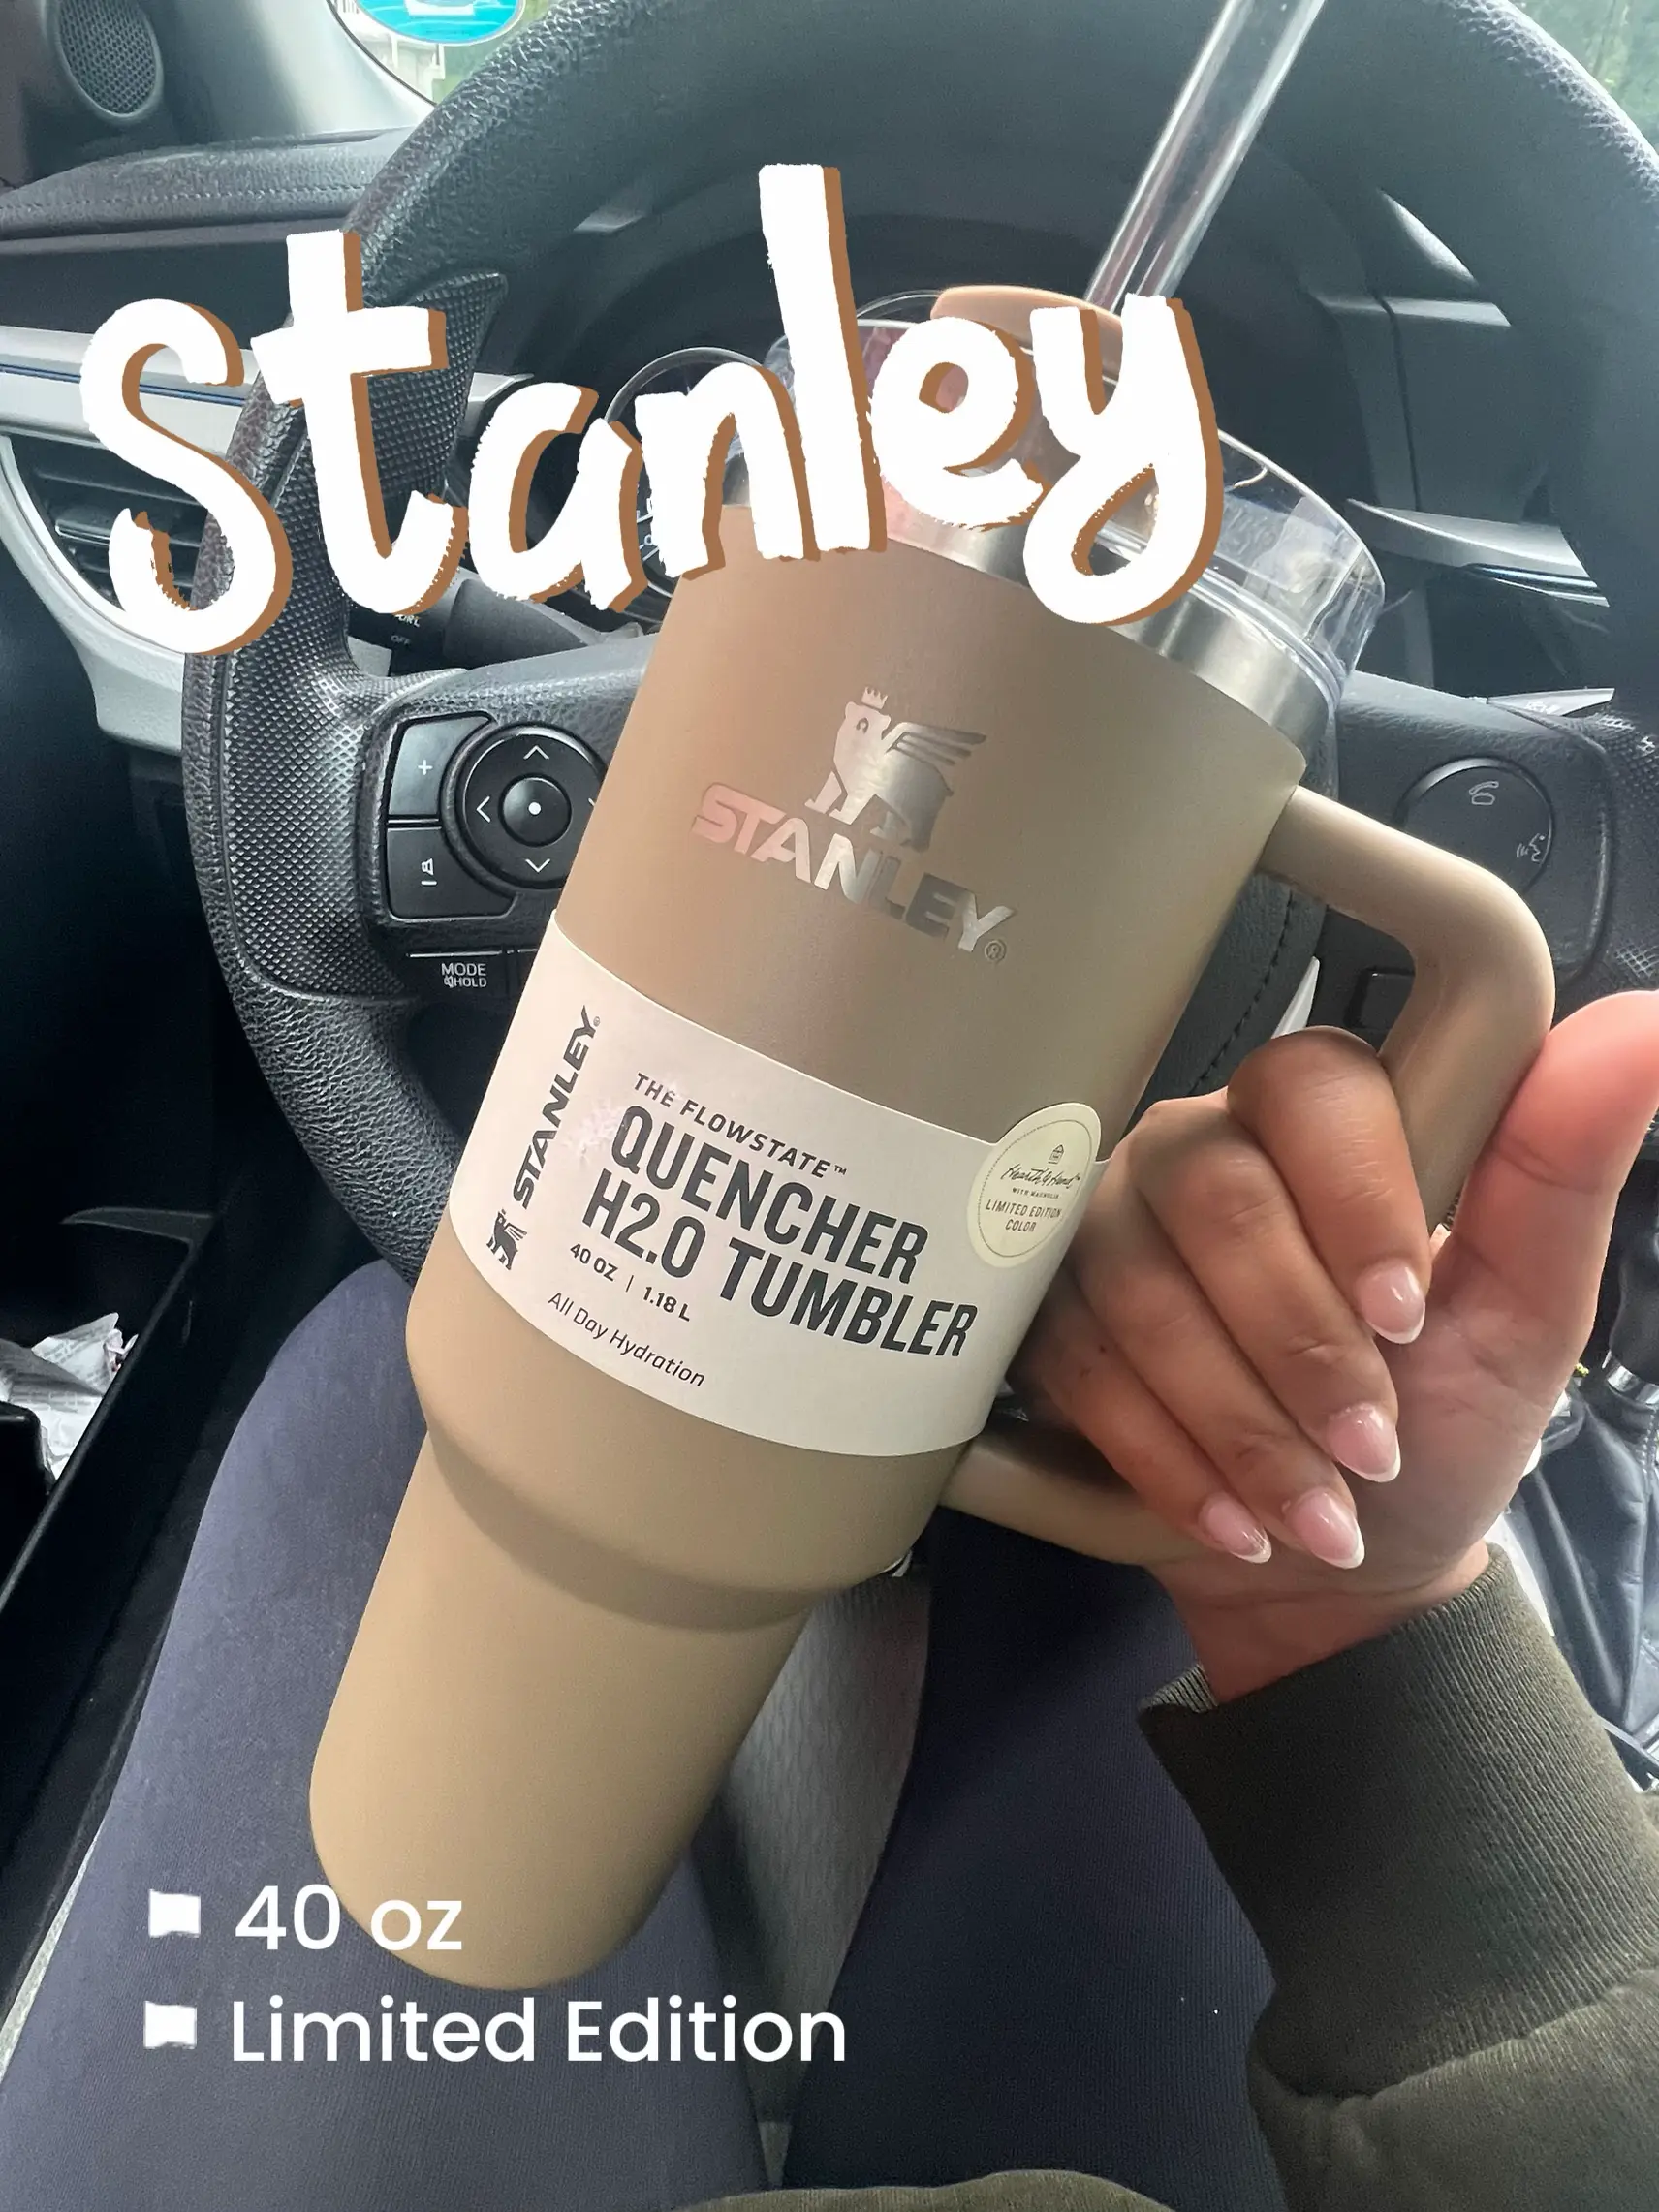 stanley cup preppy - Lemon8 Search